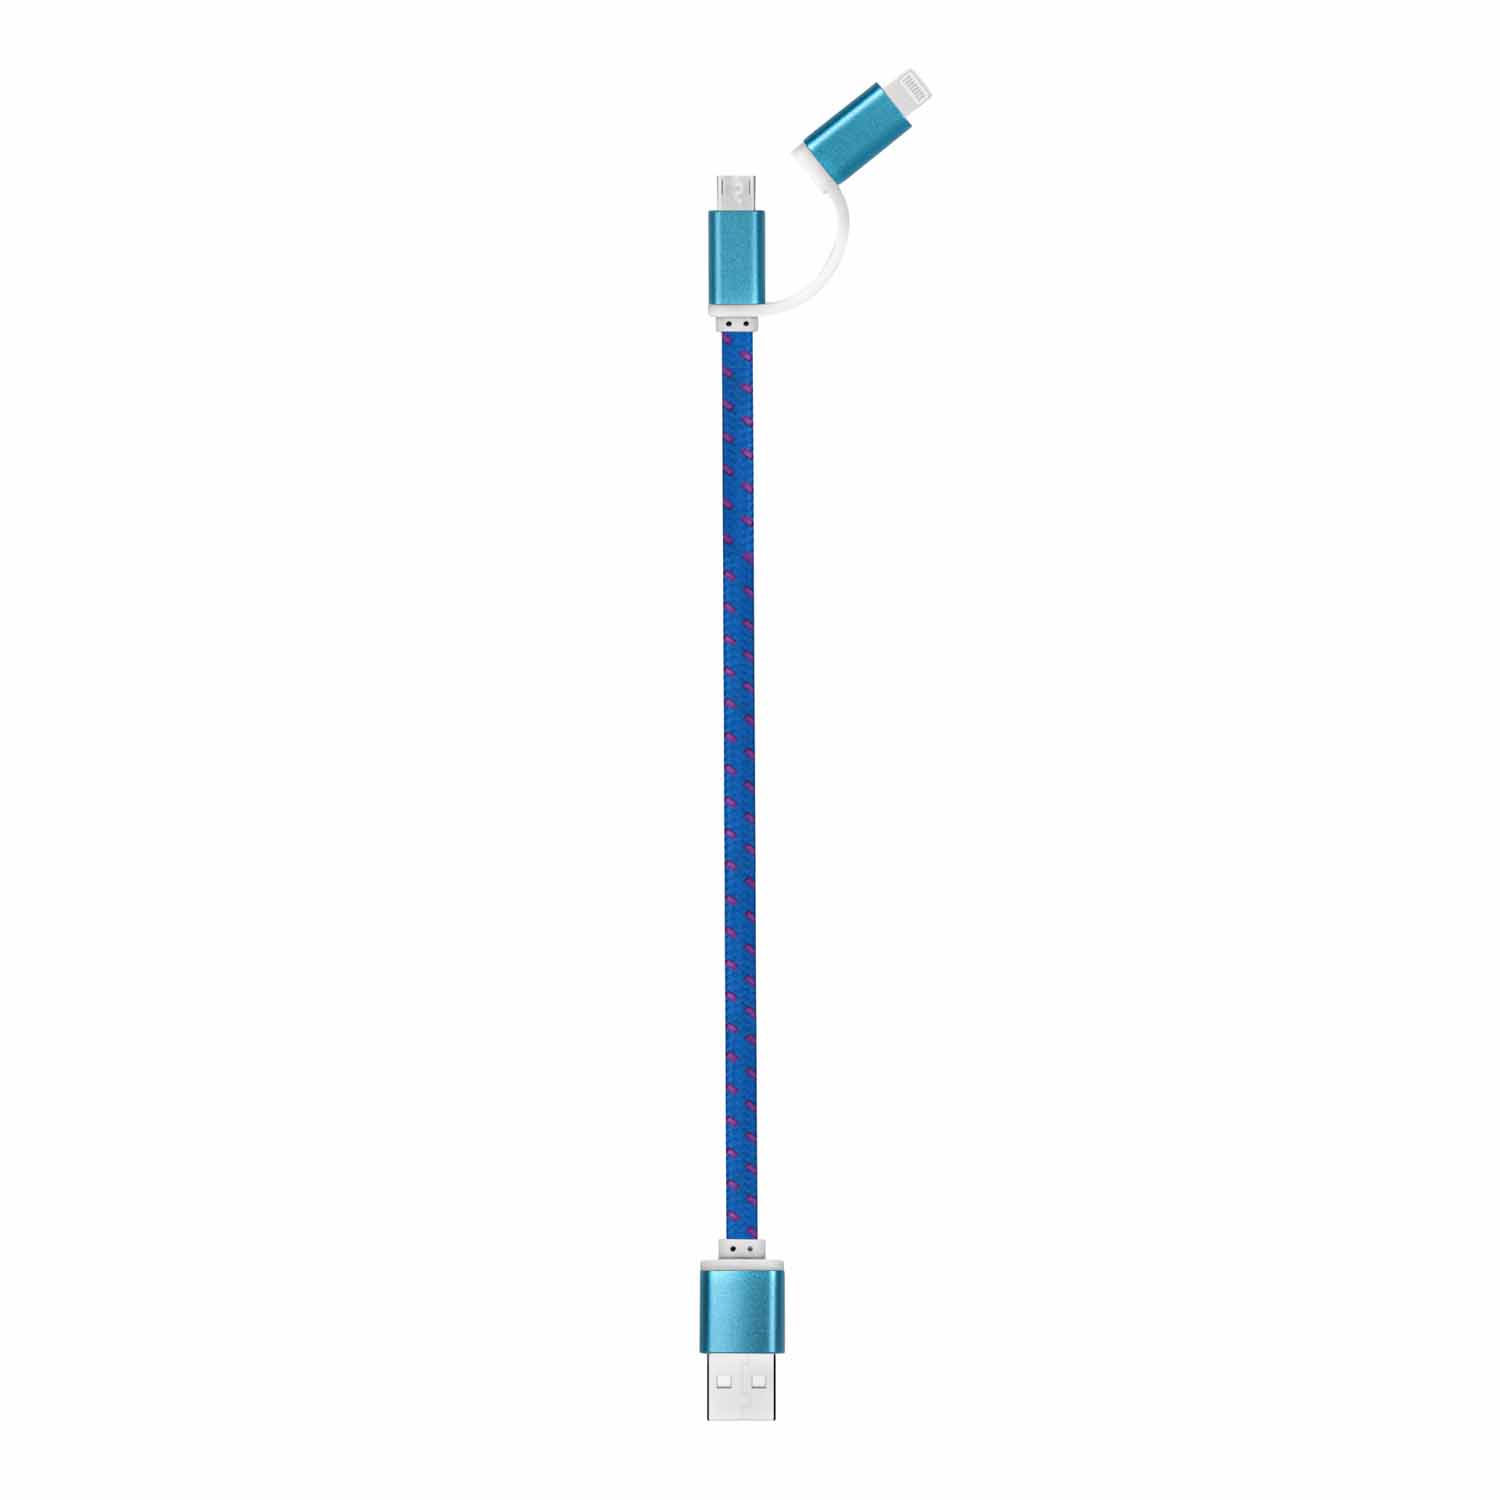 Flaches USB-Ladekabel - 20 cm - Dual-Anschluss Micro-USB und